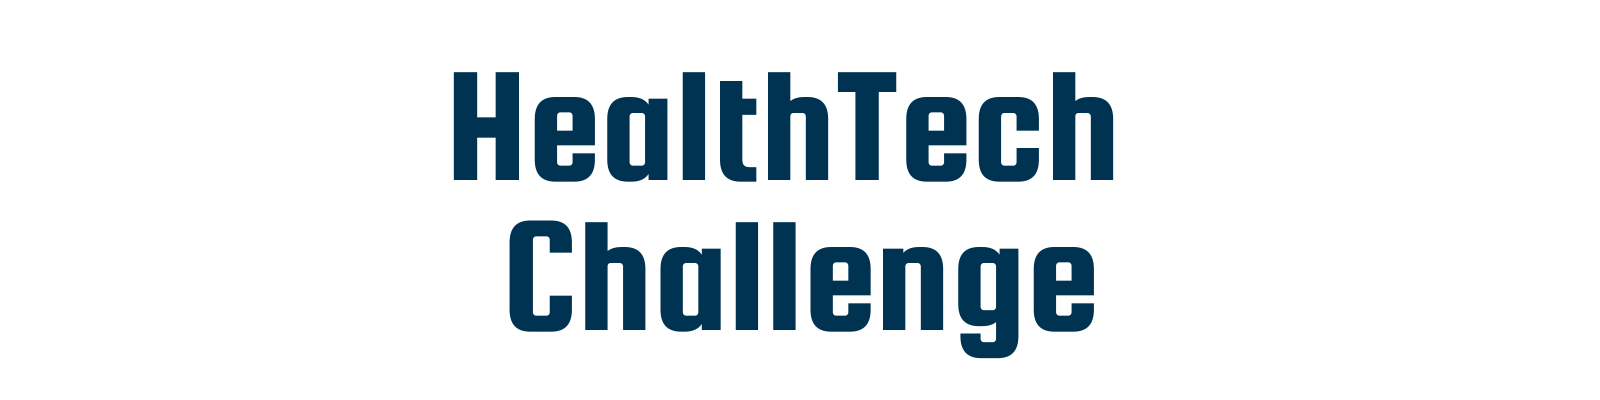 HealthTech-Challenge-Web-Header.png